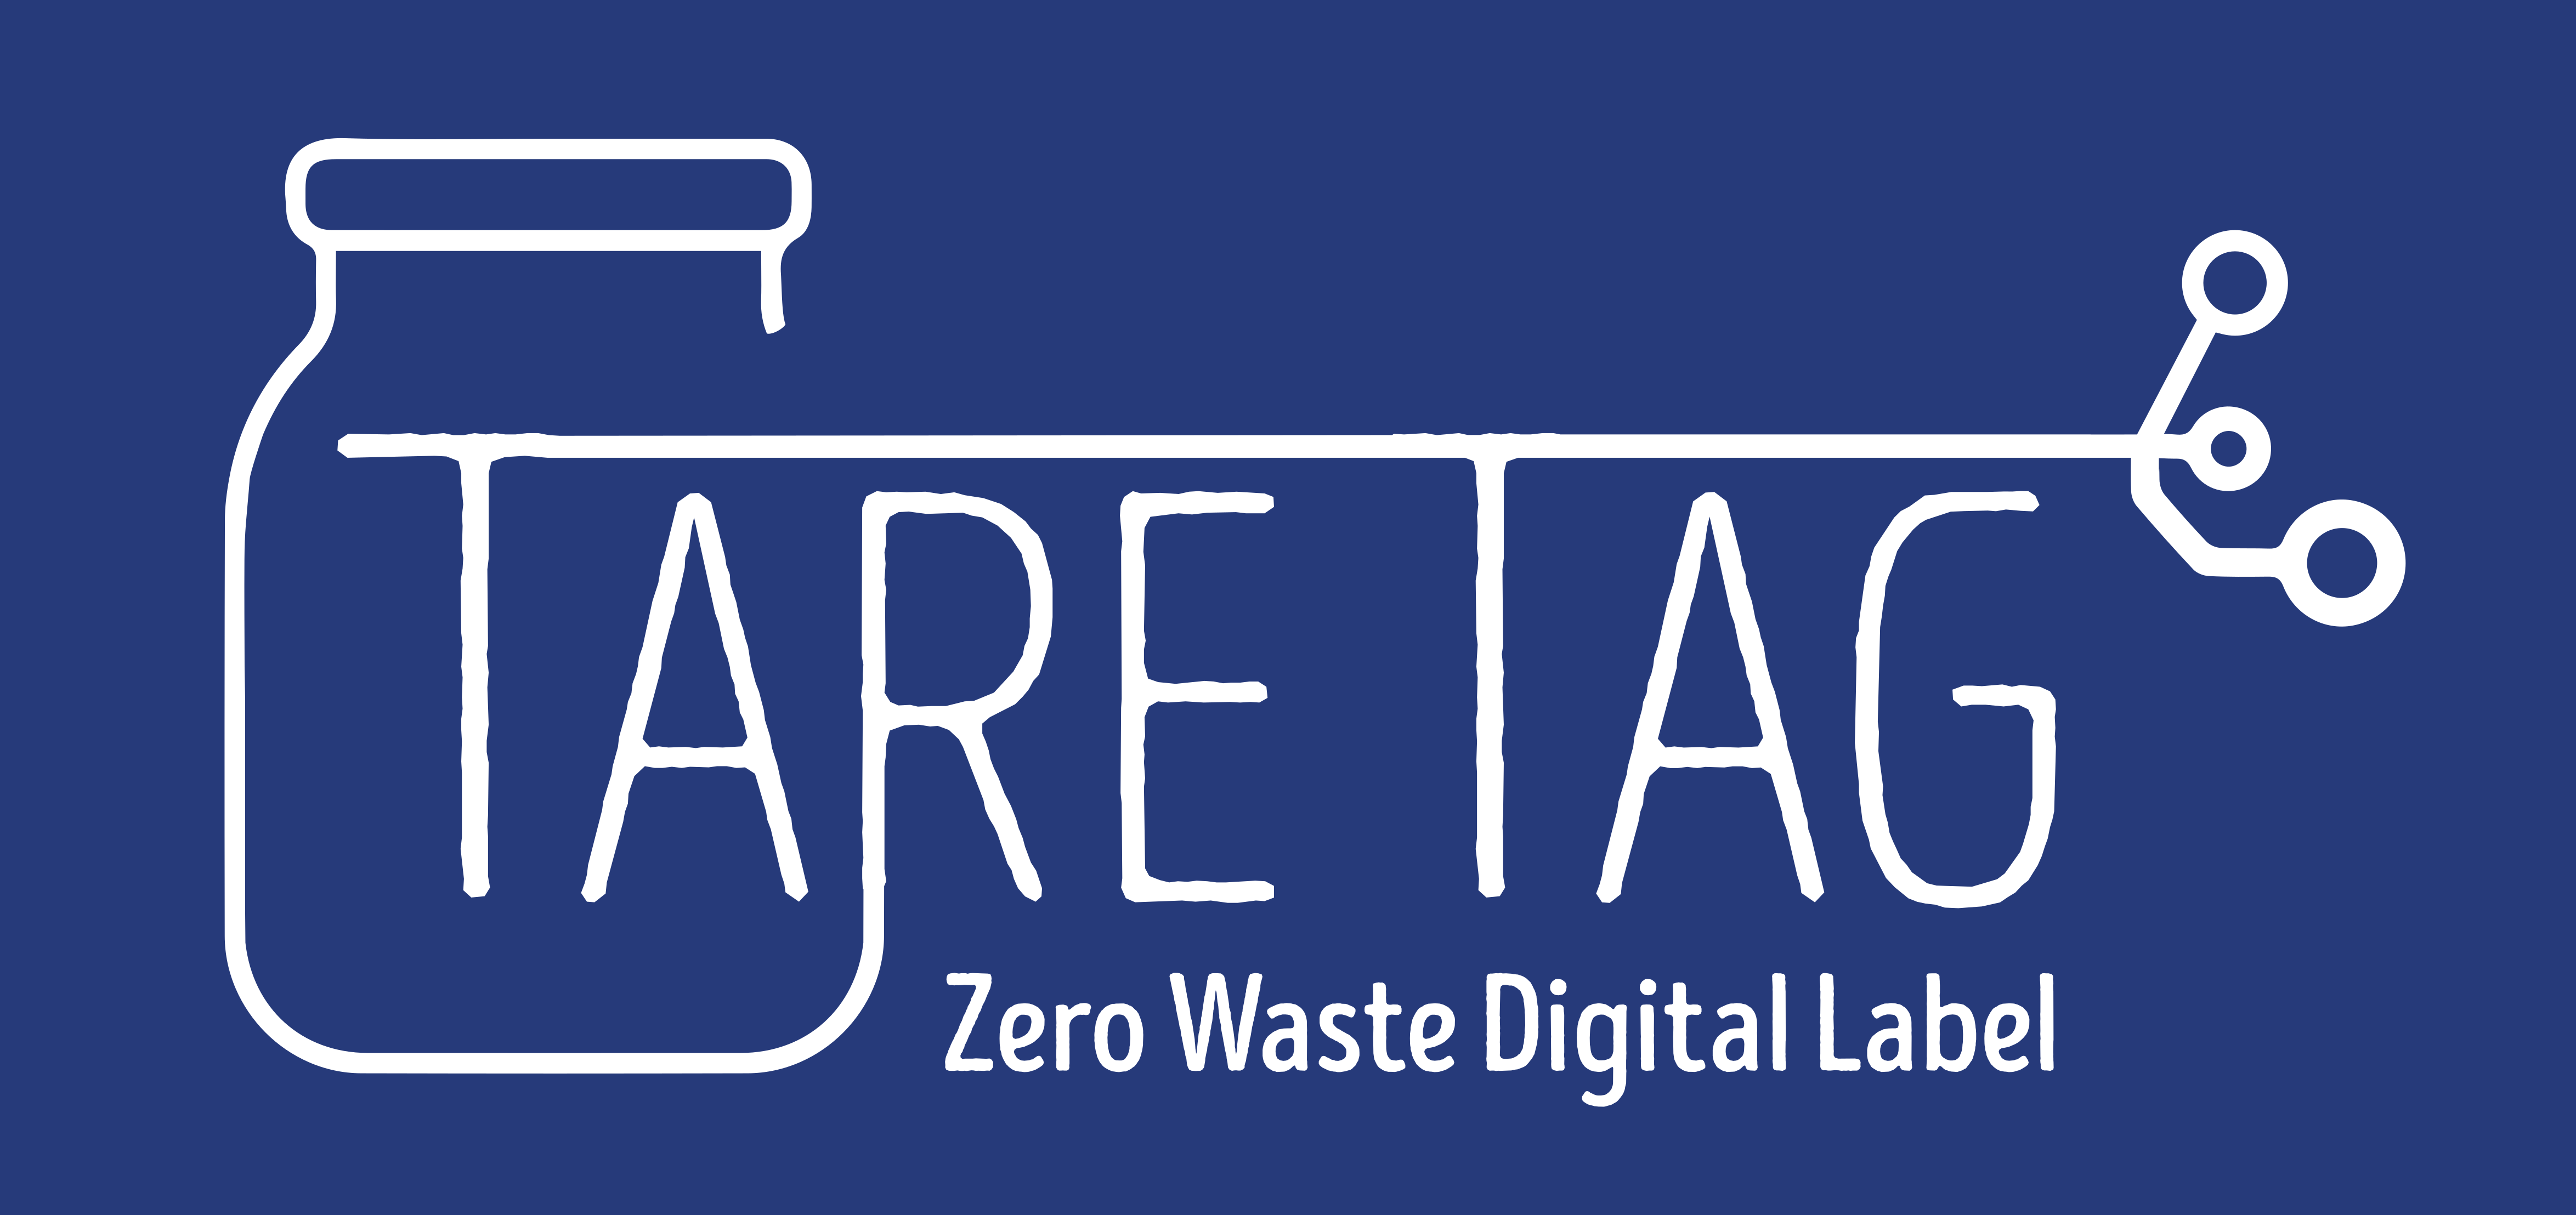 TareTag Zero Waste Digital Label